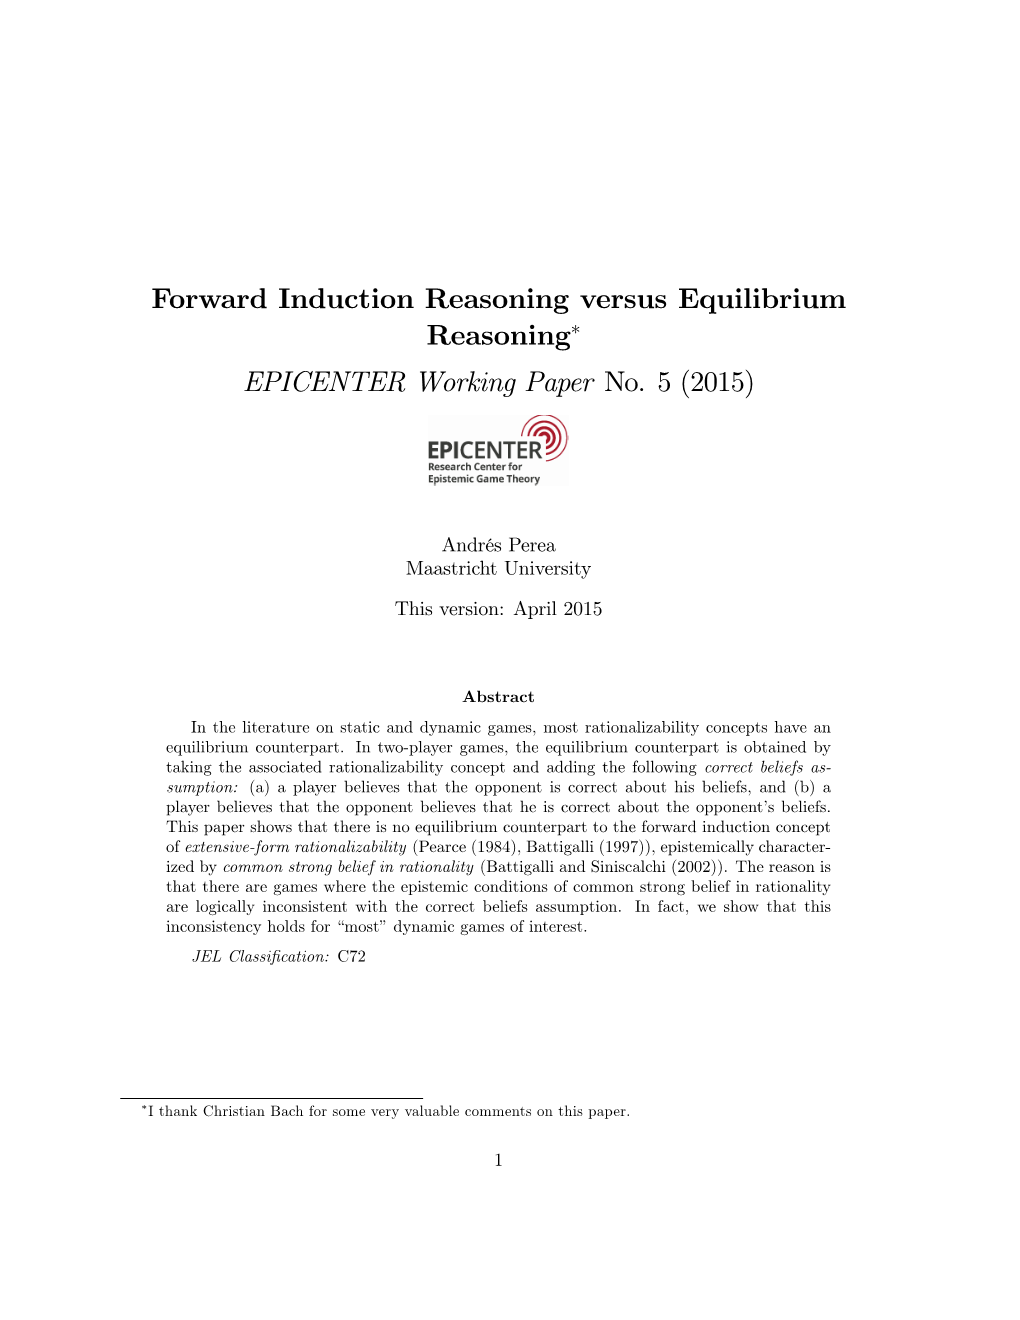 Forward Induction Reasoning Versus Equilibrium Reasoning EPICENTER Working Paper No